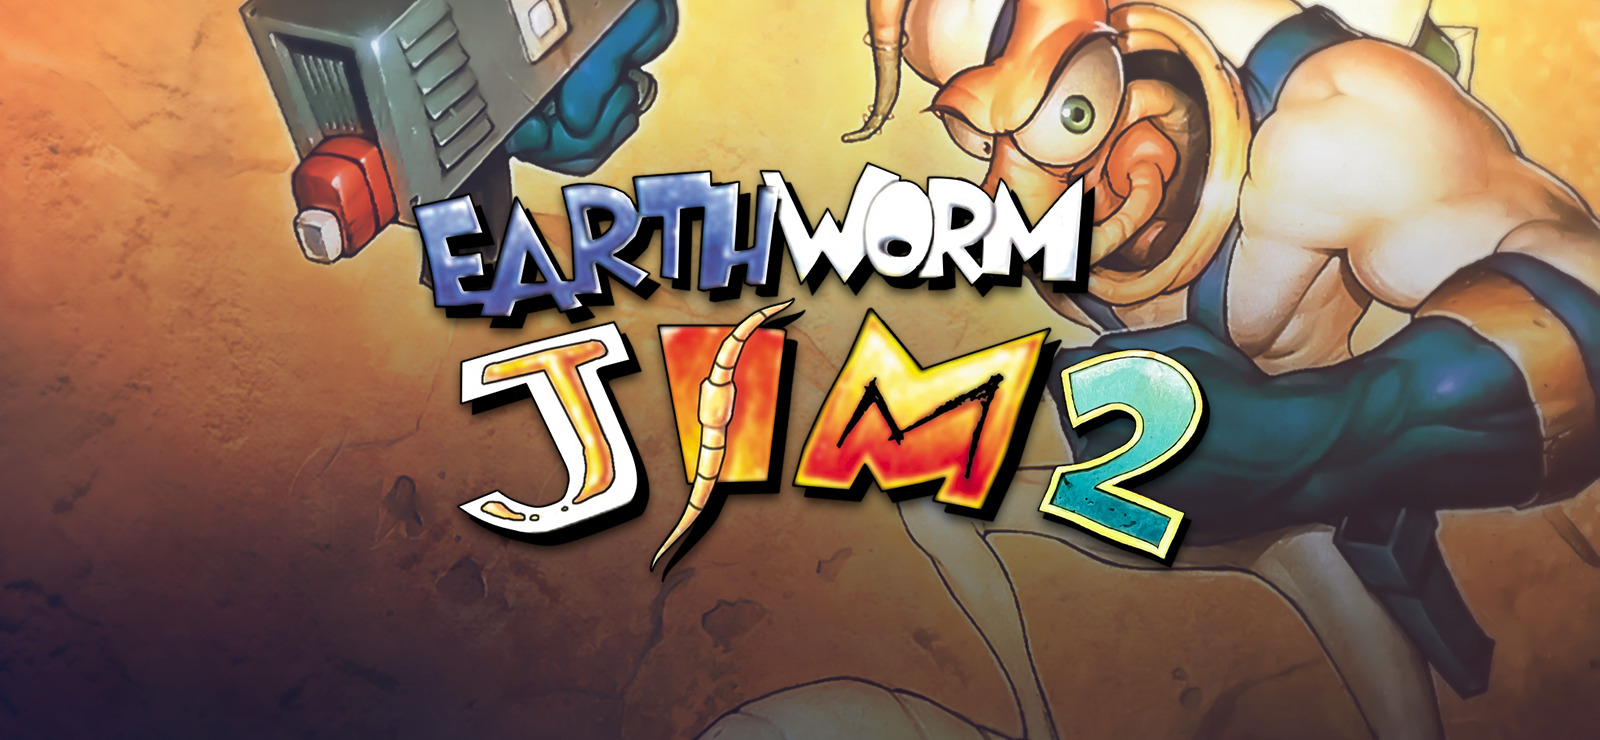 download earthworm jim gbc